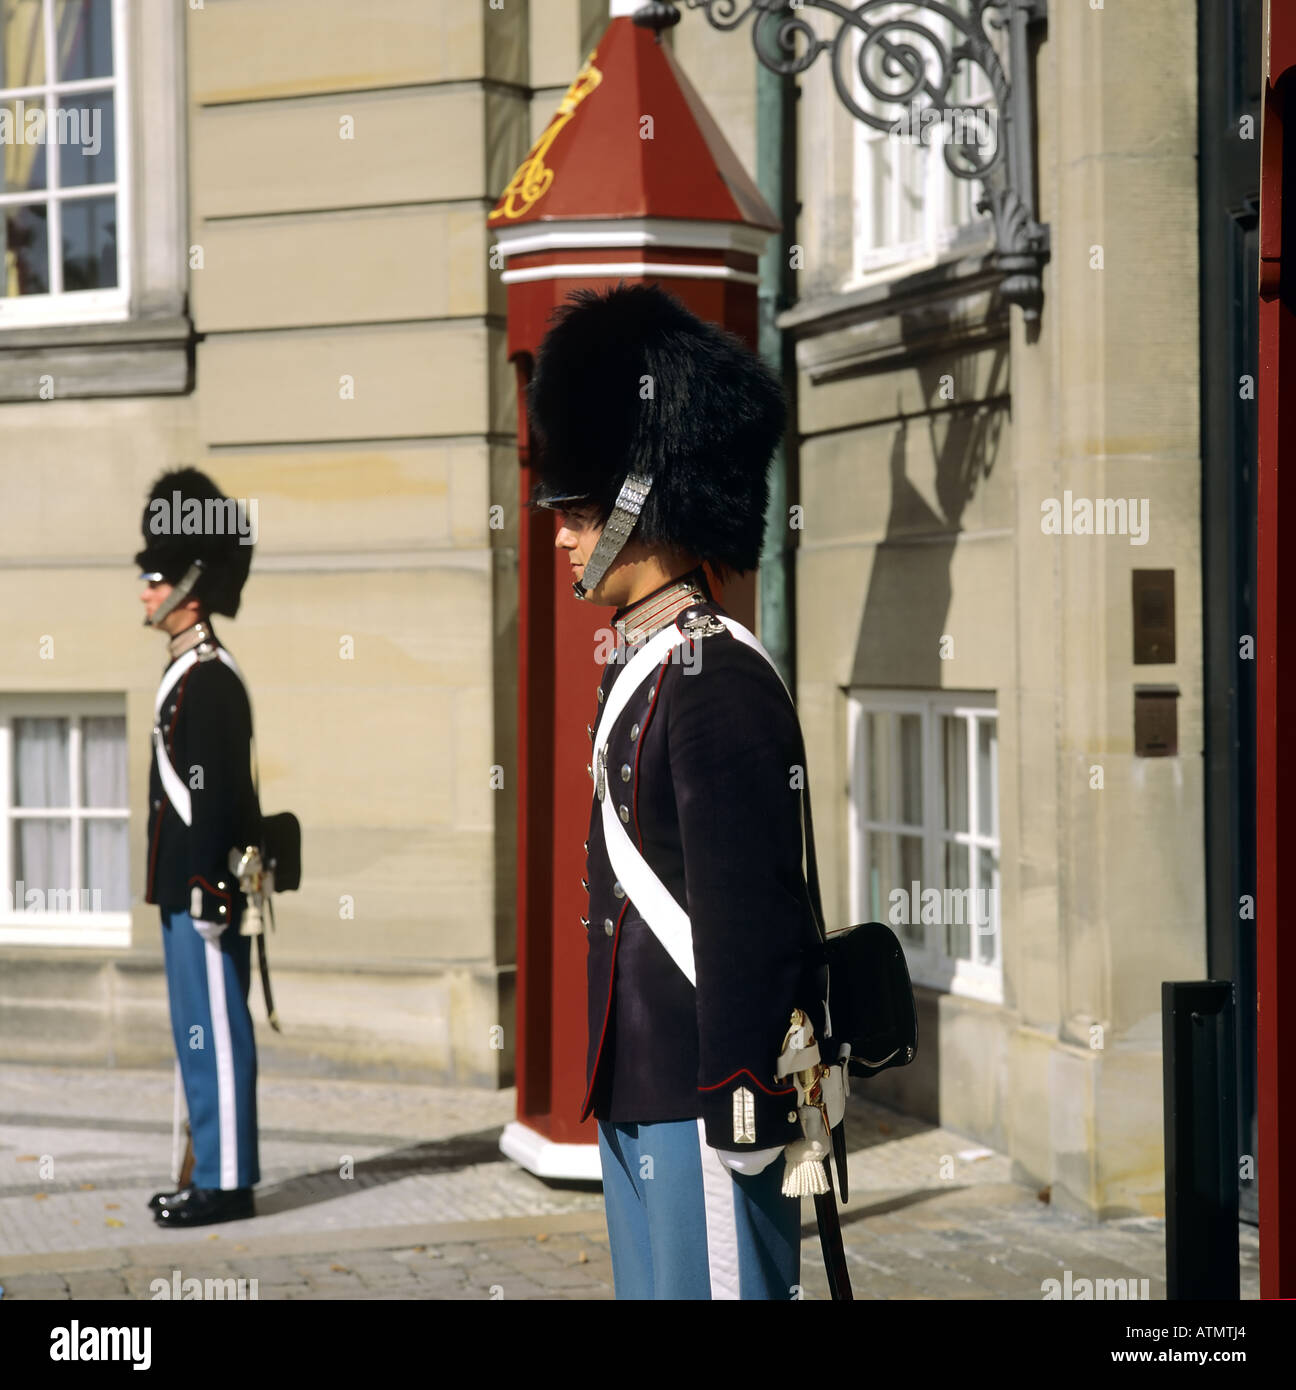 Royal life guards and sentry box, Amalienborg palace, Copenhagen, Denmark, Europe Stock Photo